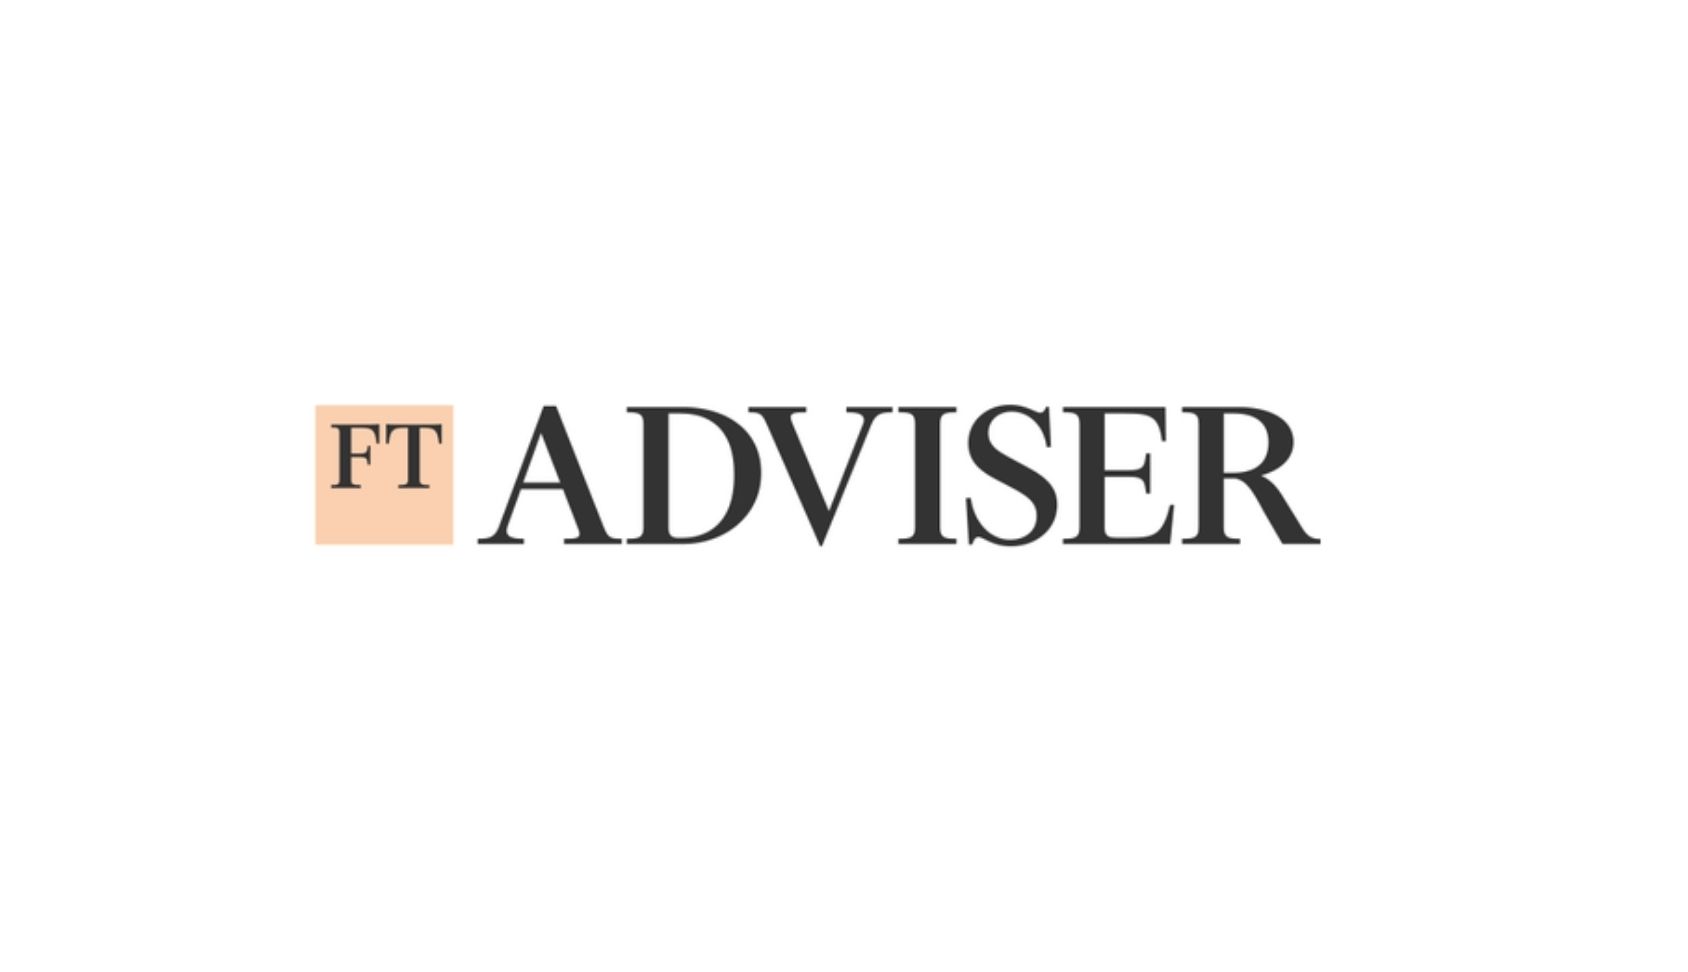 Should you use private markets? – Delio in the FT Adviser